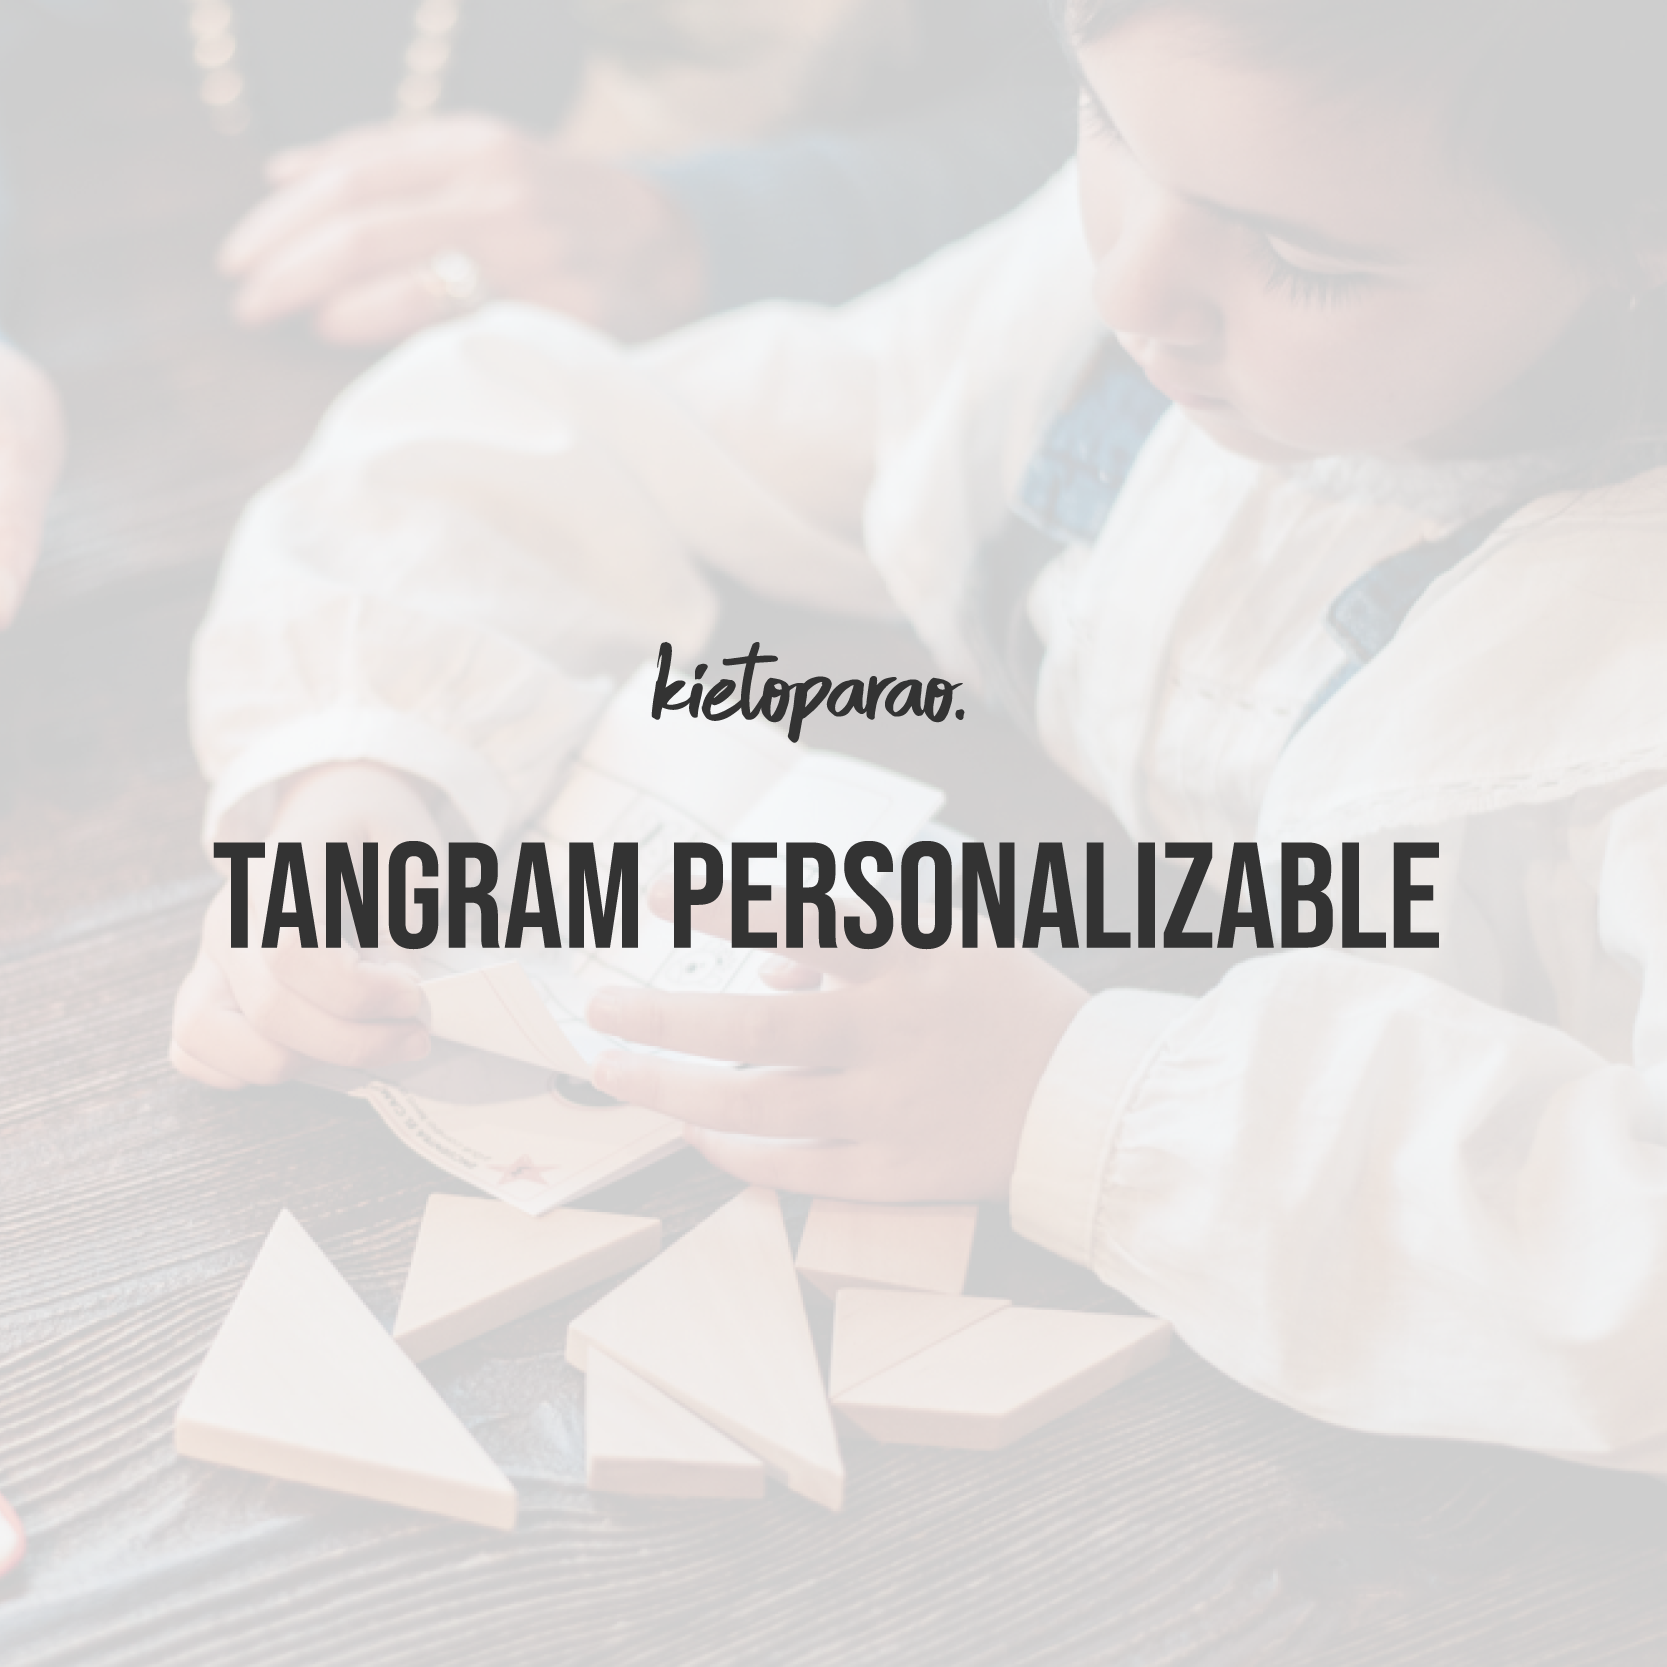 Tangram Kietoparao personalizable